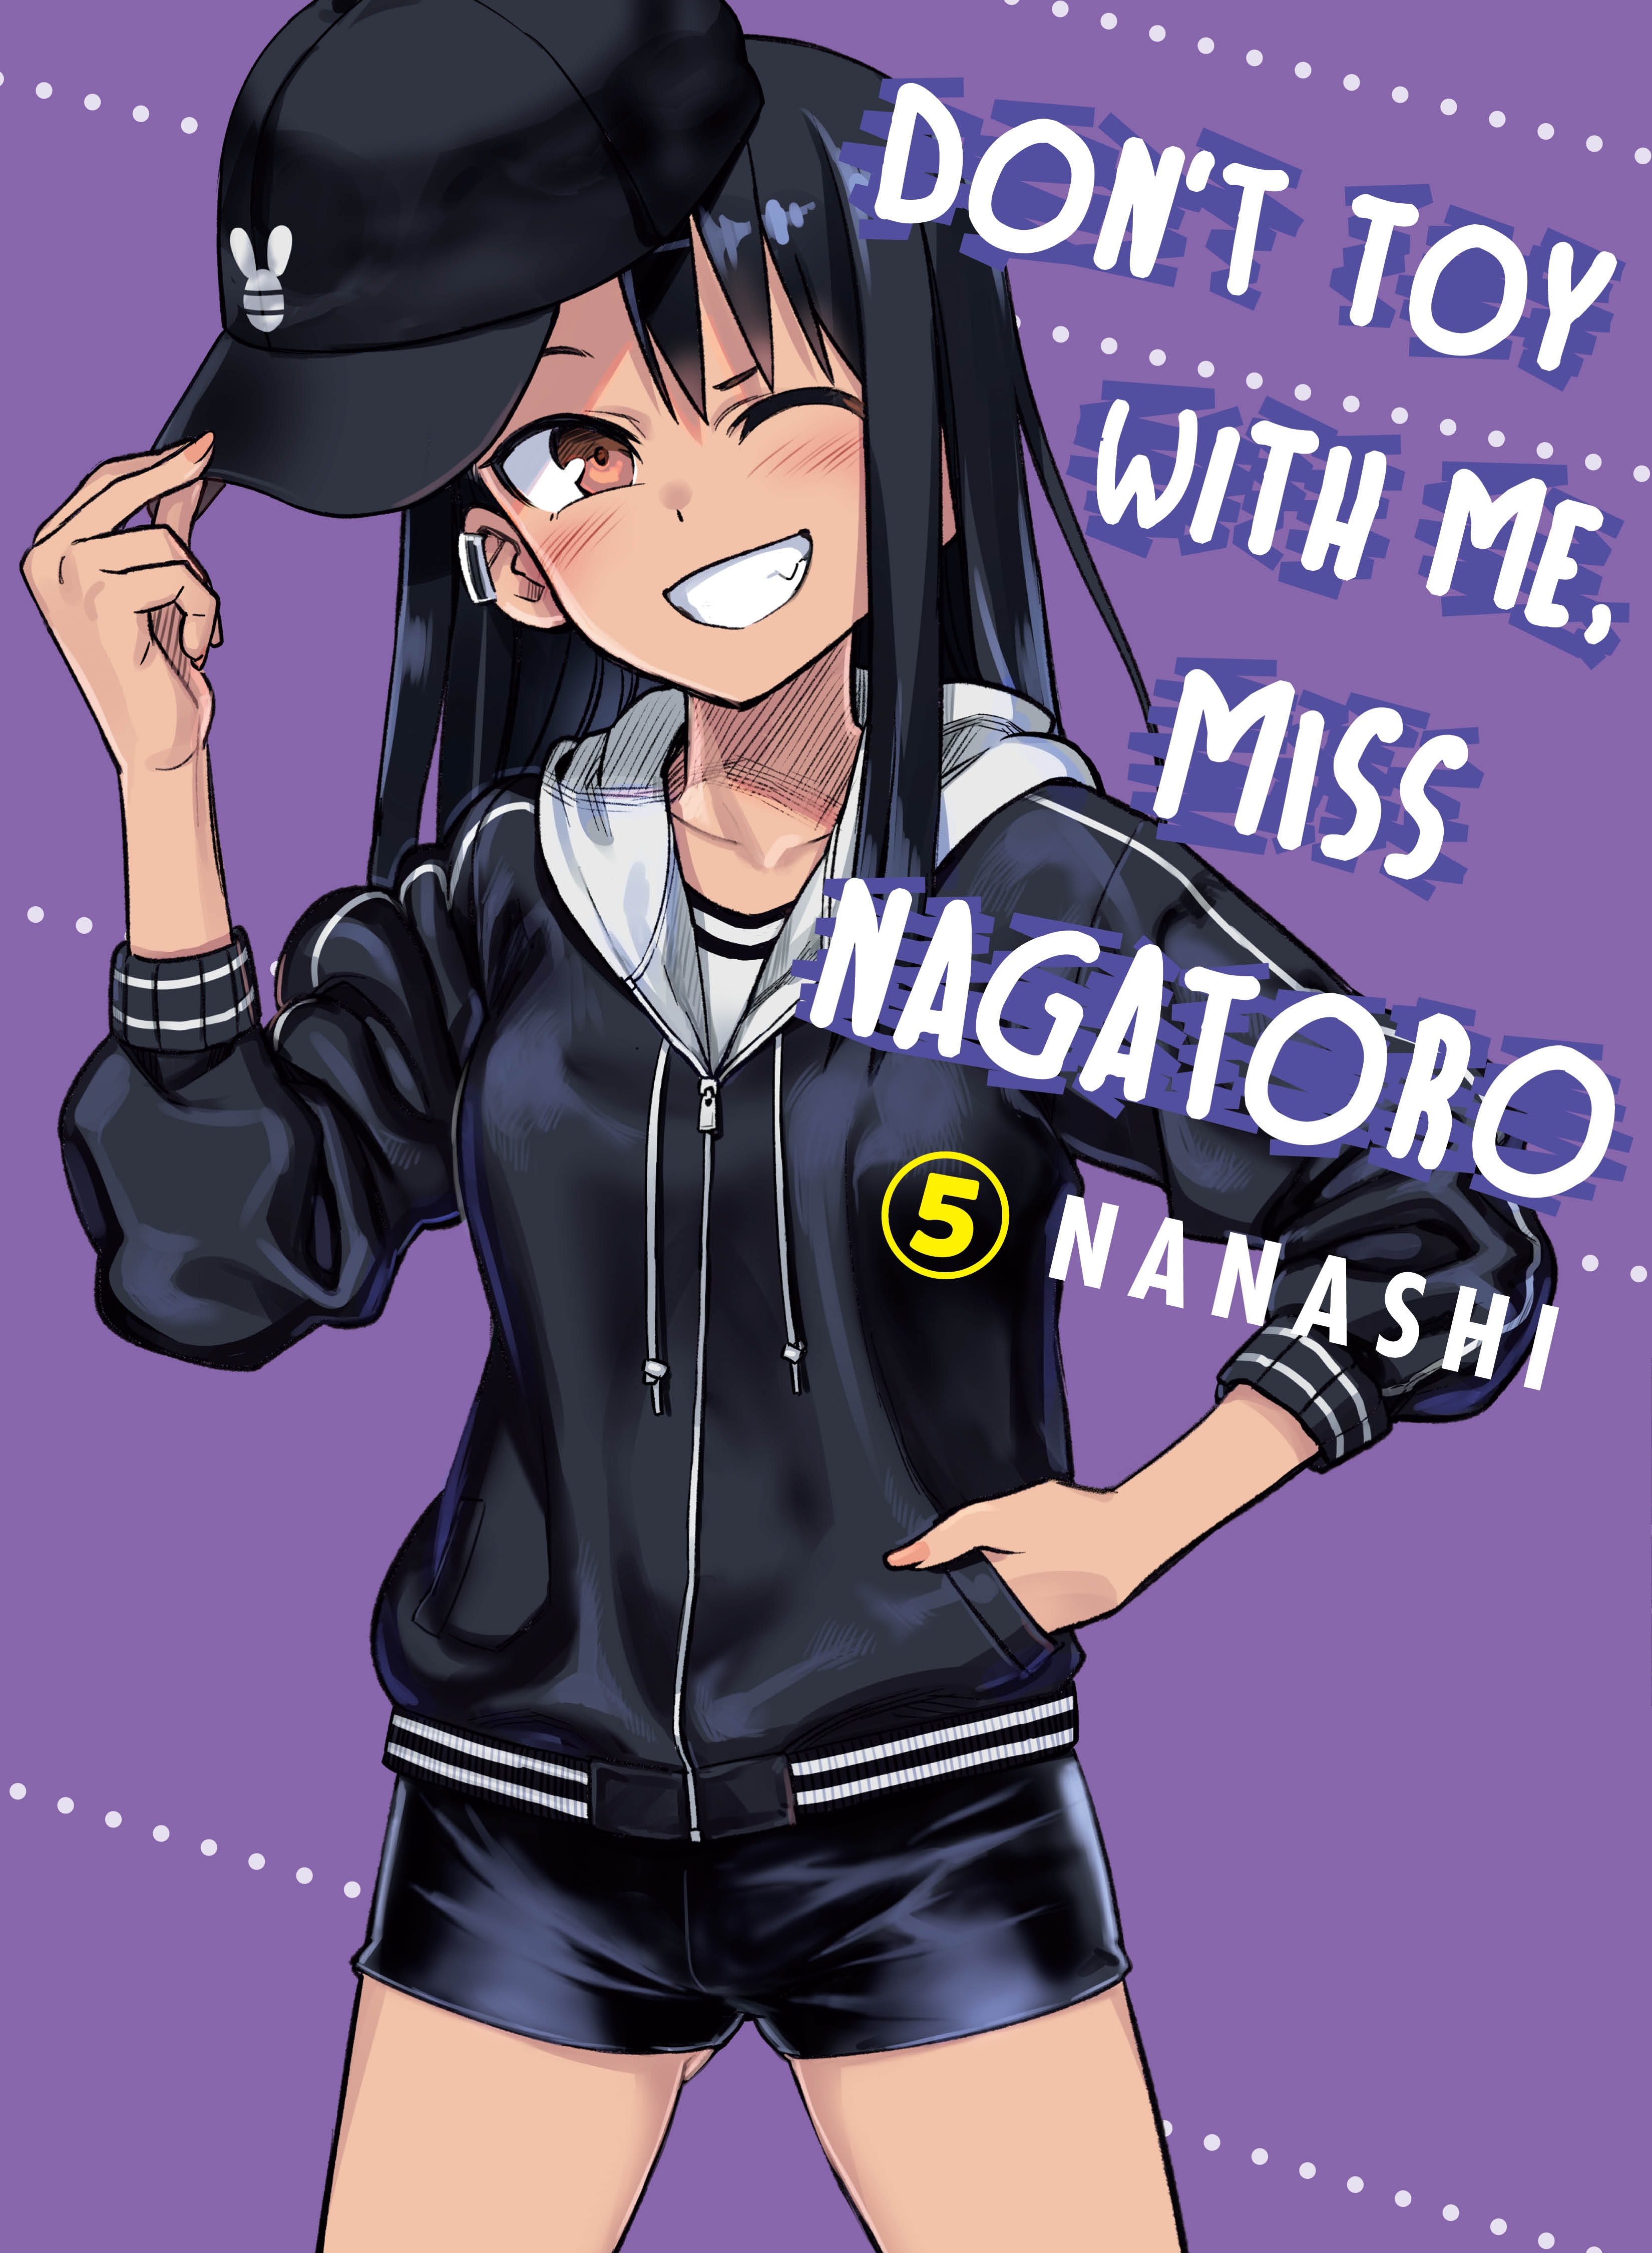 Dont Toy With Me Miss Nagatoro Volume 5 By Nanashi Penguin Books